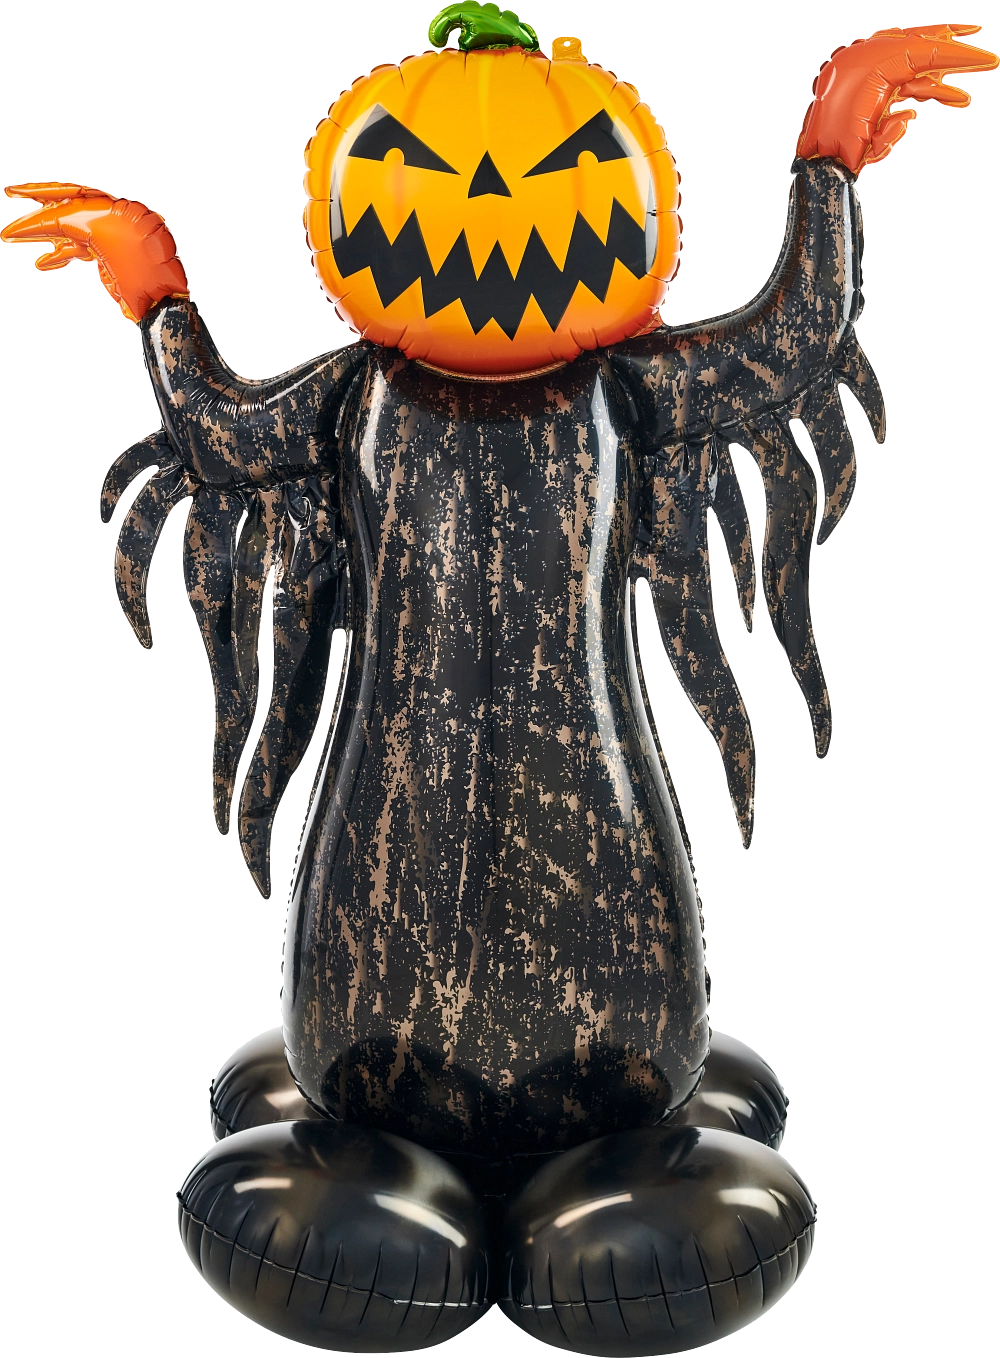 Spooky Pumpkin Head Ghost - Airloonz